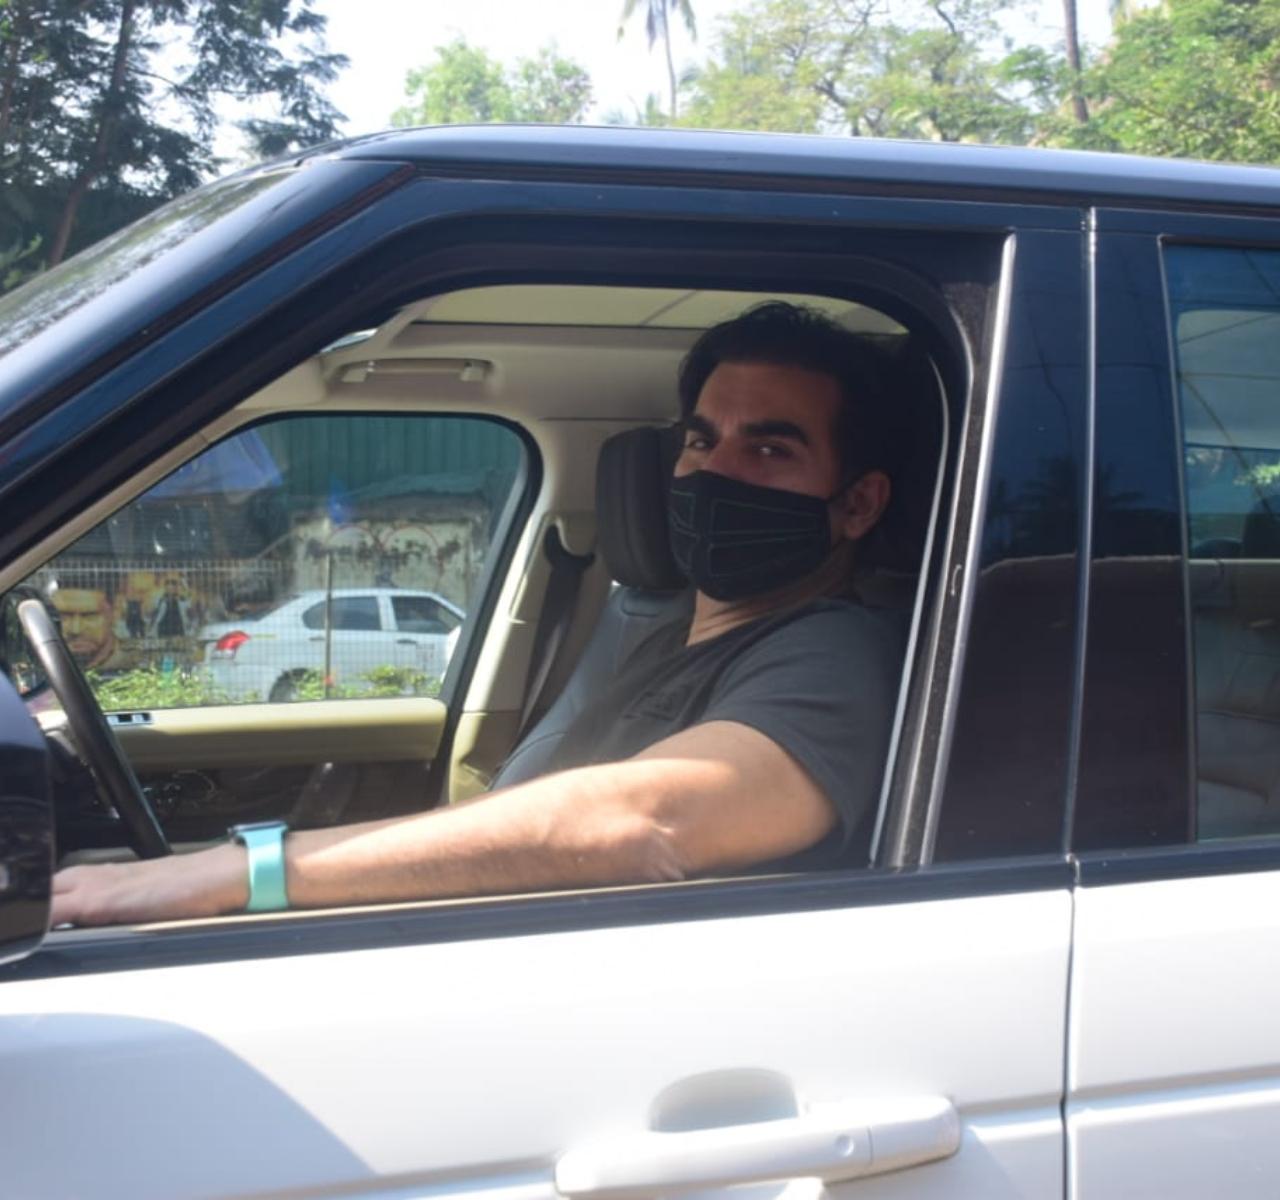 Arbaaz Khan was snapped enjoying his car ride in the same suburb.